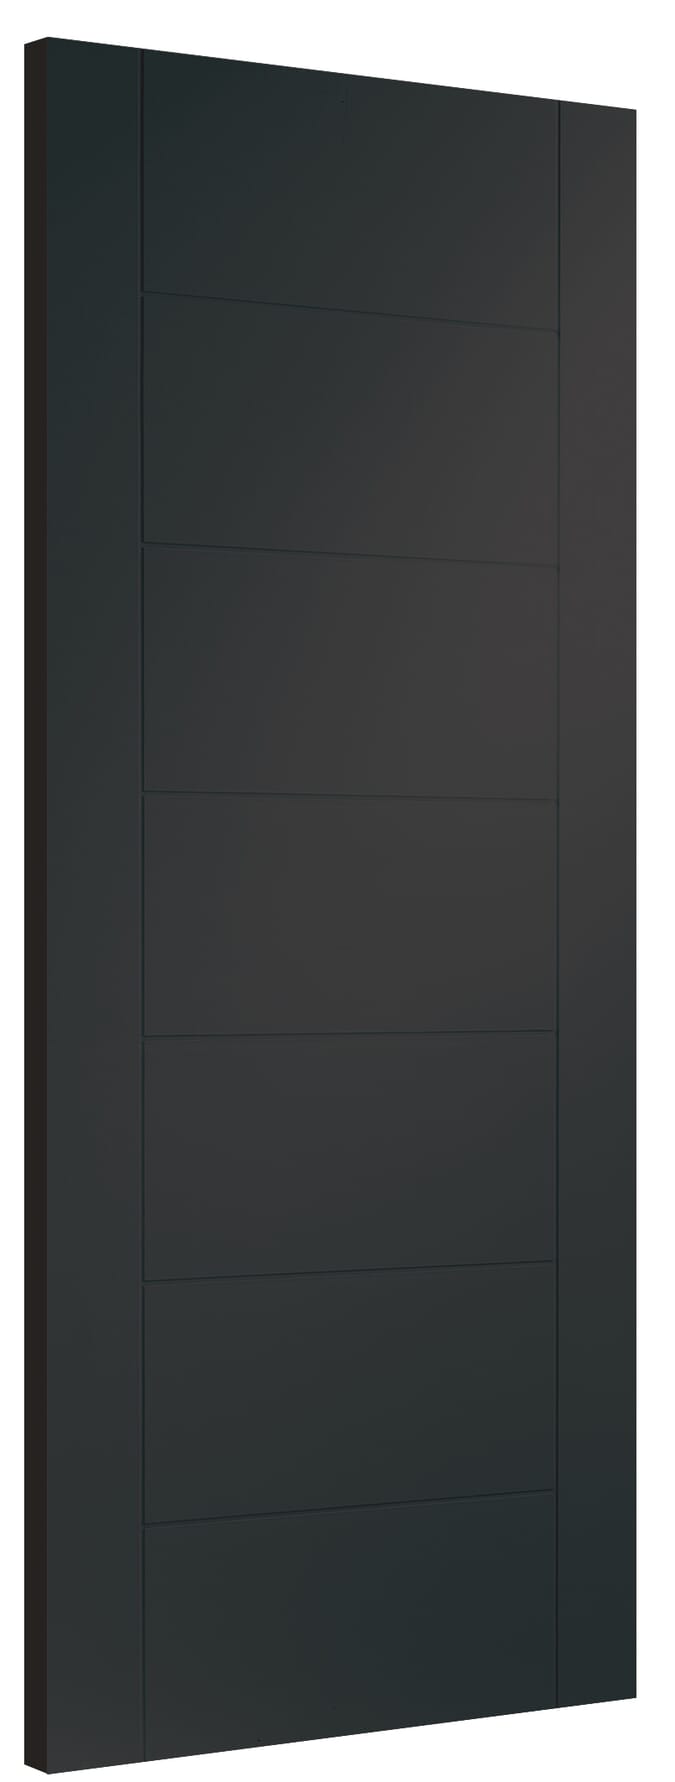 762x1981x35mm (30") Palermo Cosmos Black Internal Doors